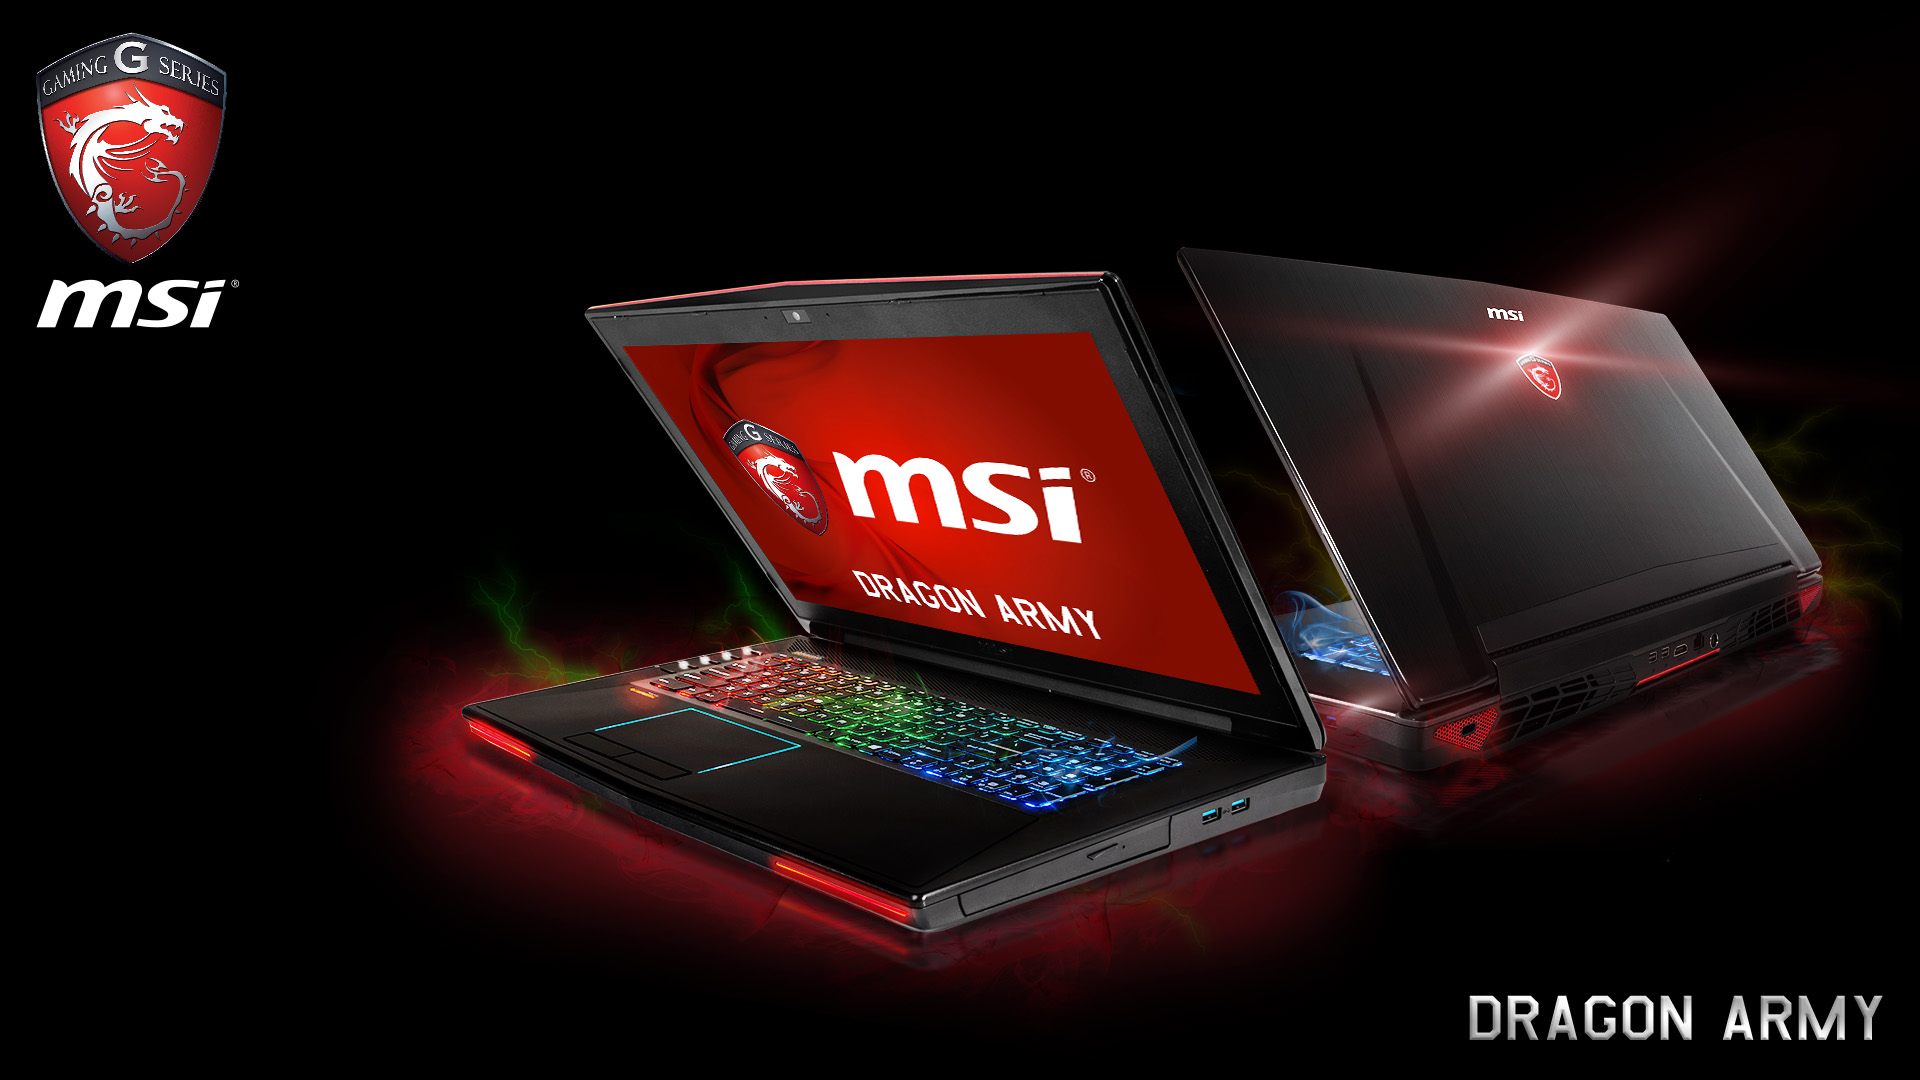 msi 배경 화면 1366x768,노트북,넷북,과학 기술,간단한 기계 장치,생성물